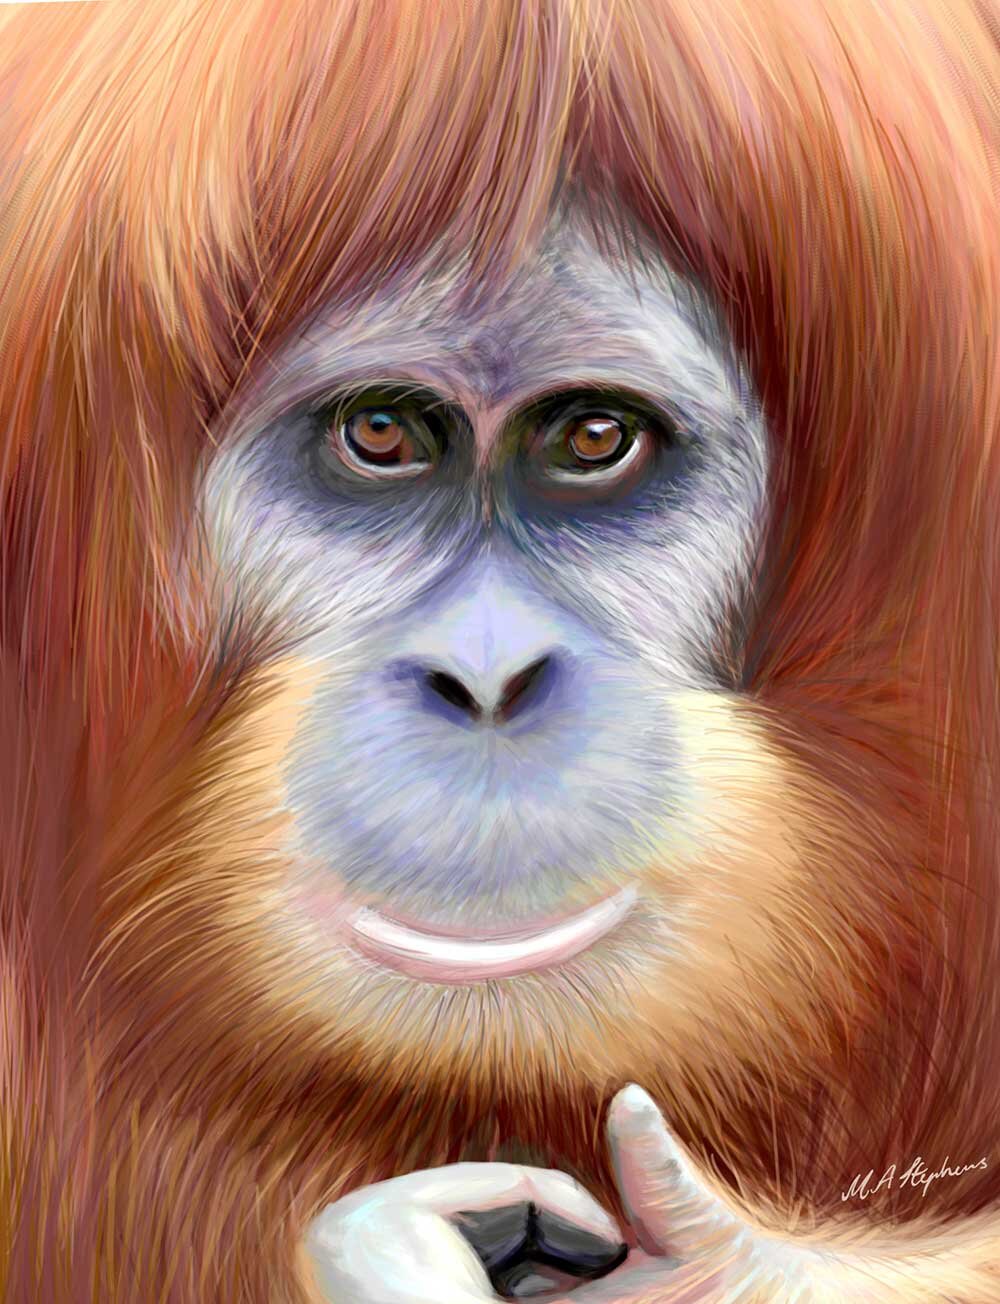 orangutan-2019.jpg